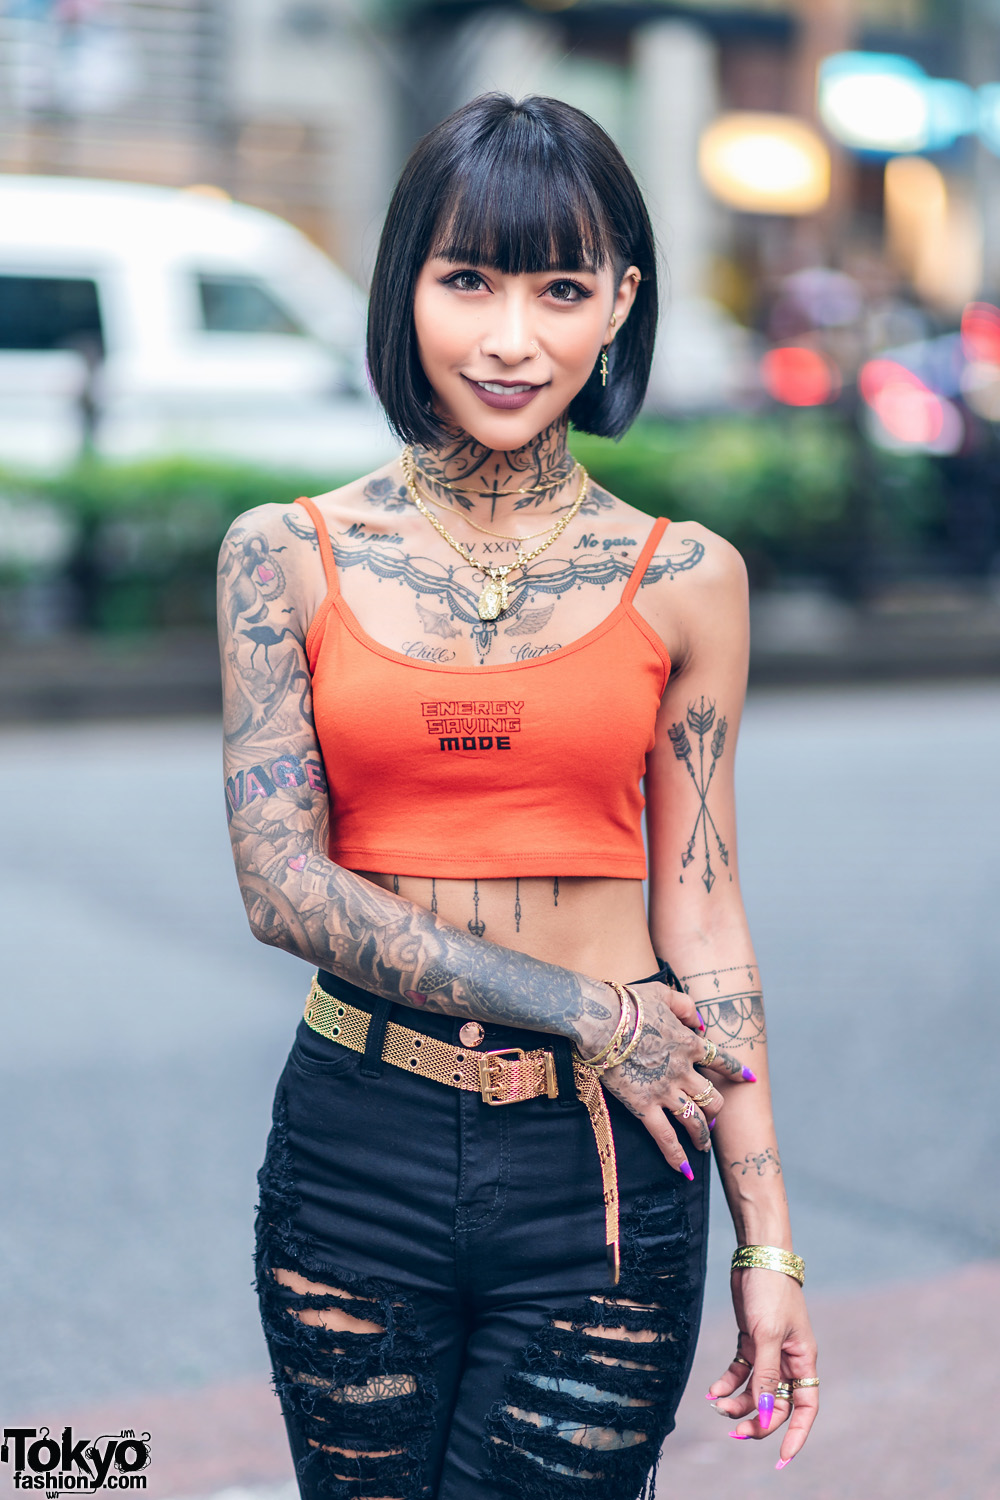 Harajuku X Cdmx Japanese Hair Makeup Artist And Model In Harajuku W Tattoos Crop Top Top